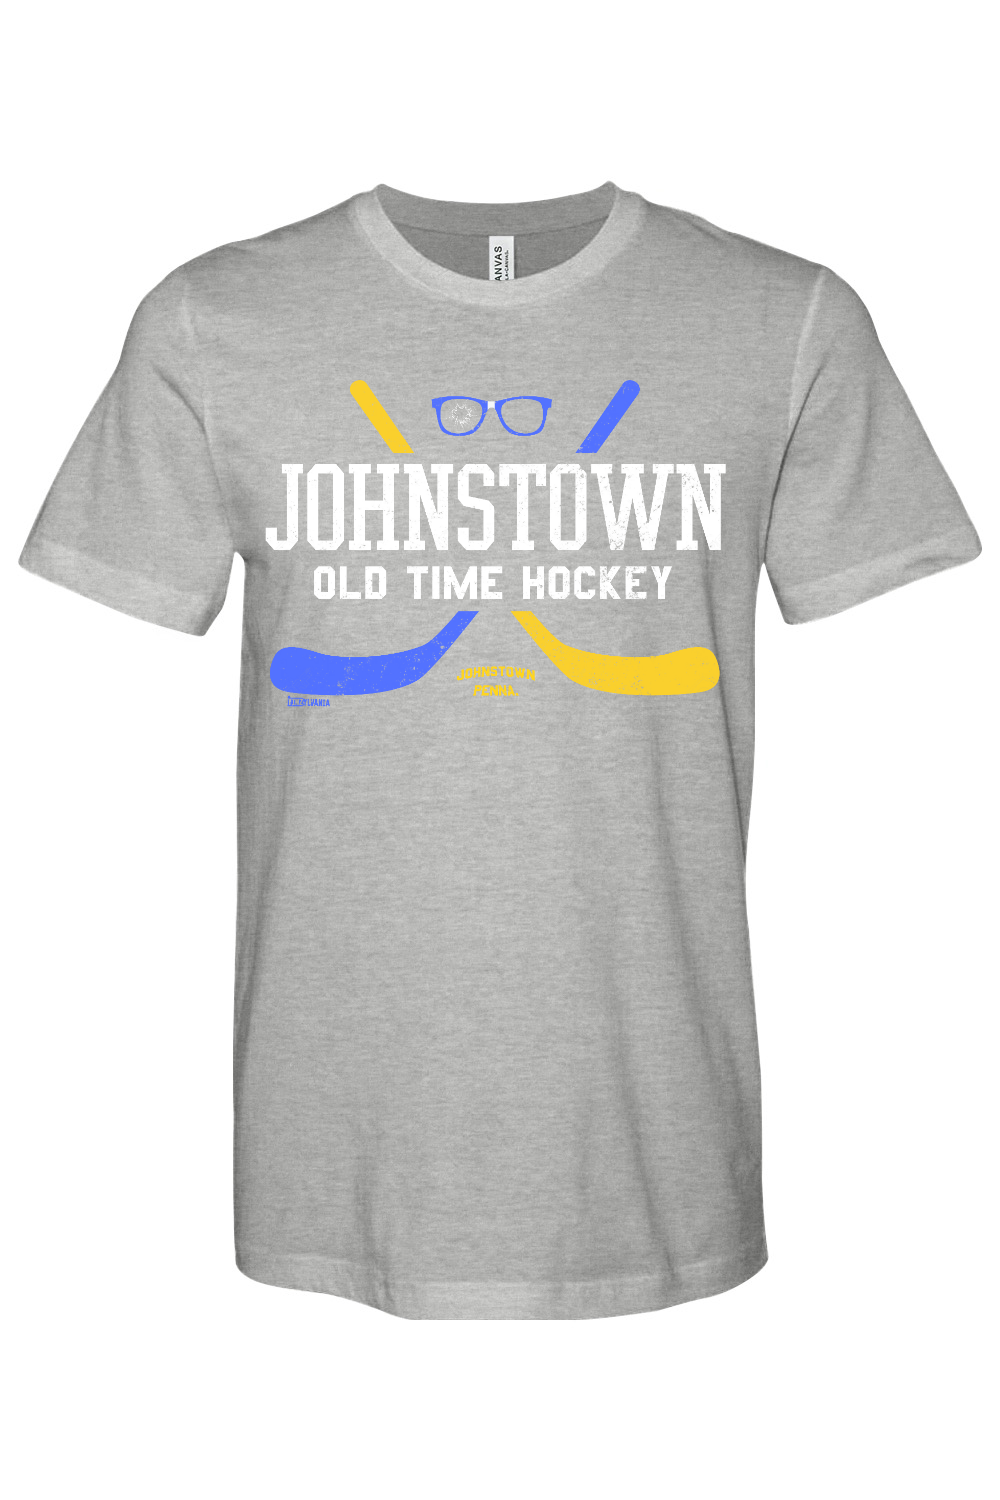 Johnstown - Old Time Hockey - Bella + Canvas Heathered Jersey Tee - Yinzylvania